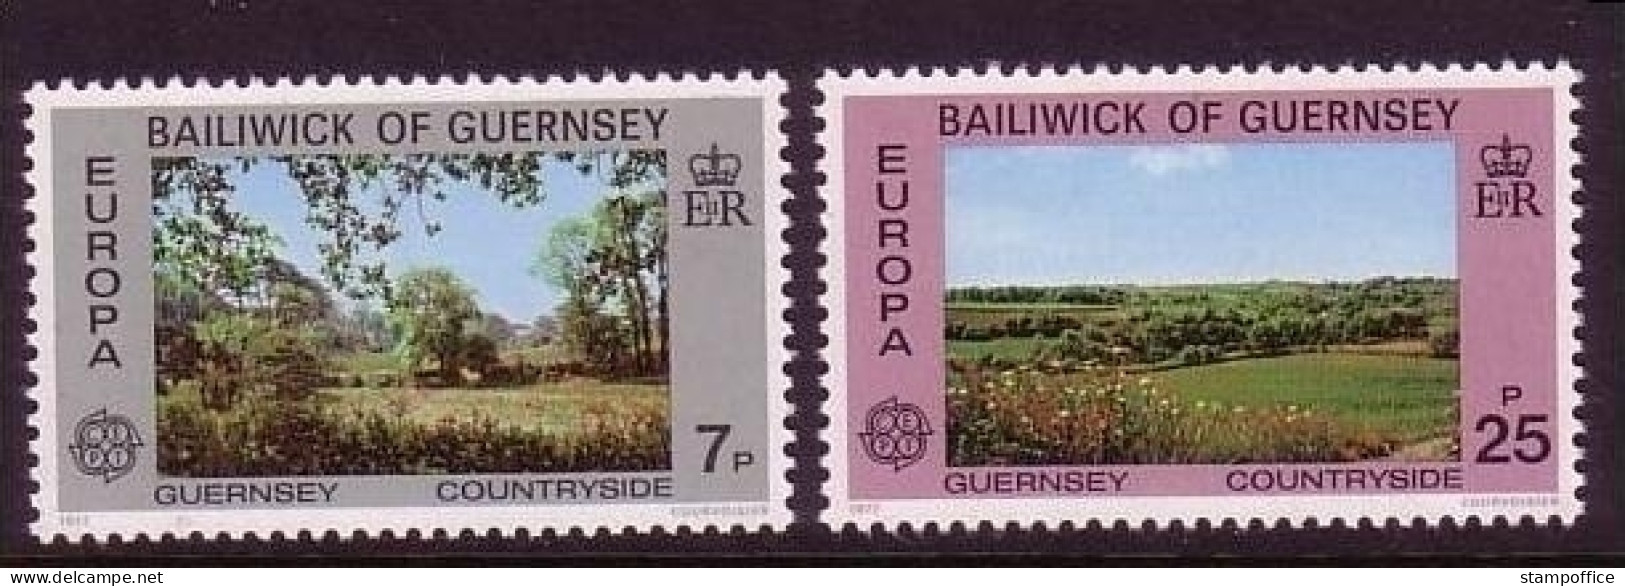 GUERNSEY MI-NR. 147-148 POSTFRISCH(MINT) EUROPA 1977 - LANDSCHAFTEN - 1977